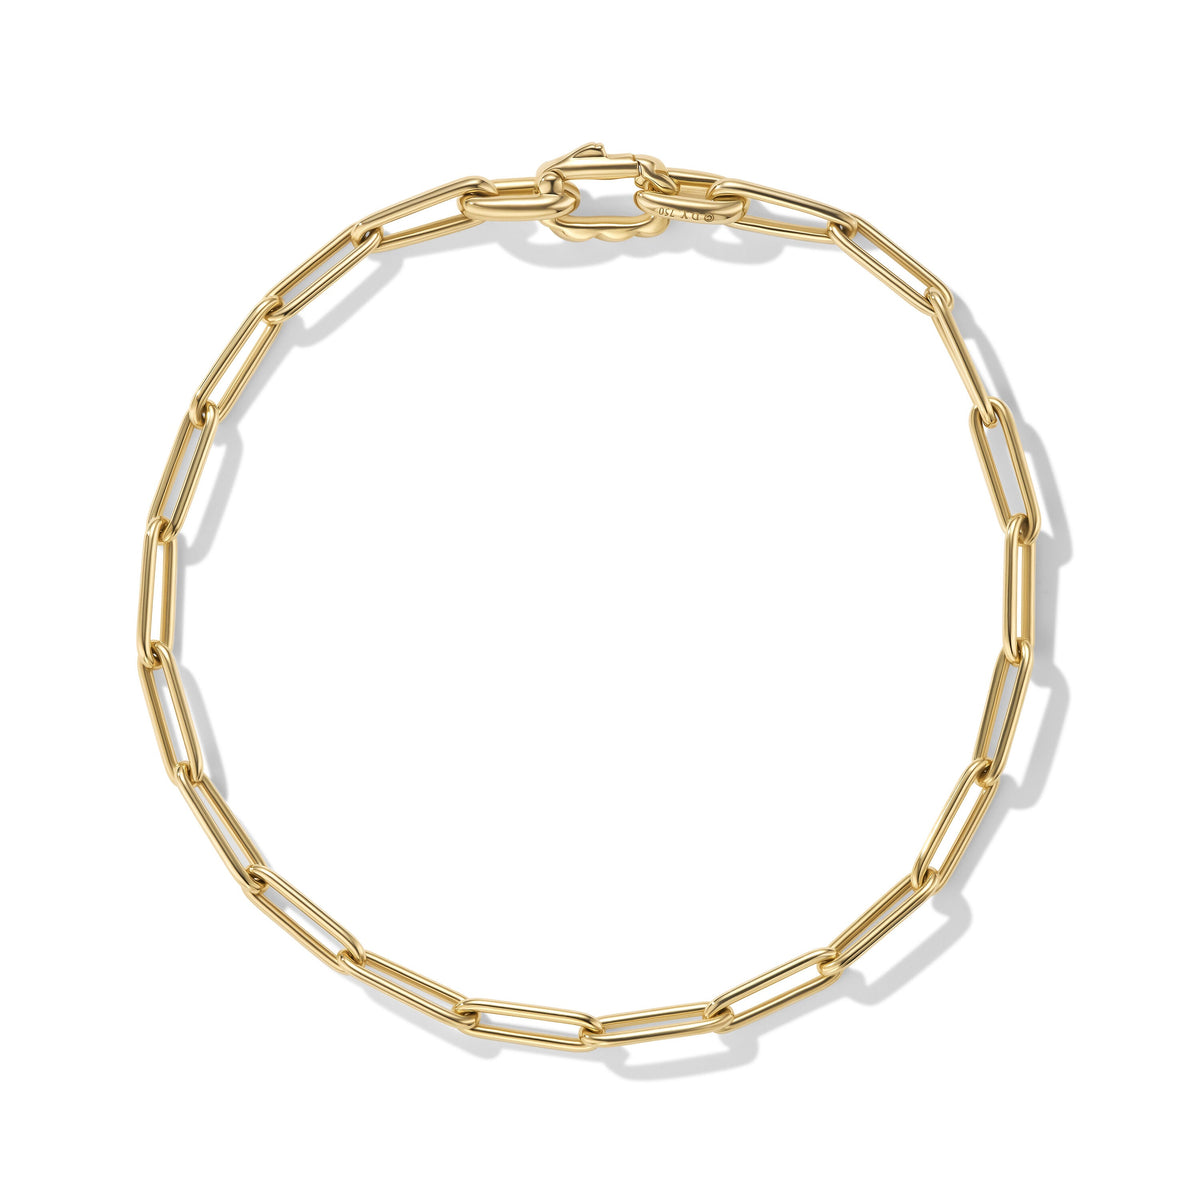 Chain Link Bracelet in 18K Yellow Gold